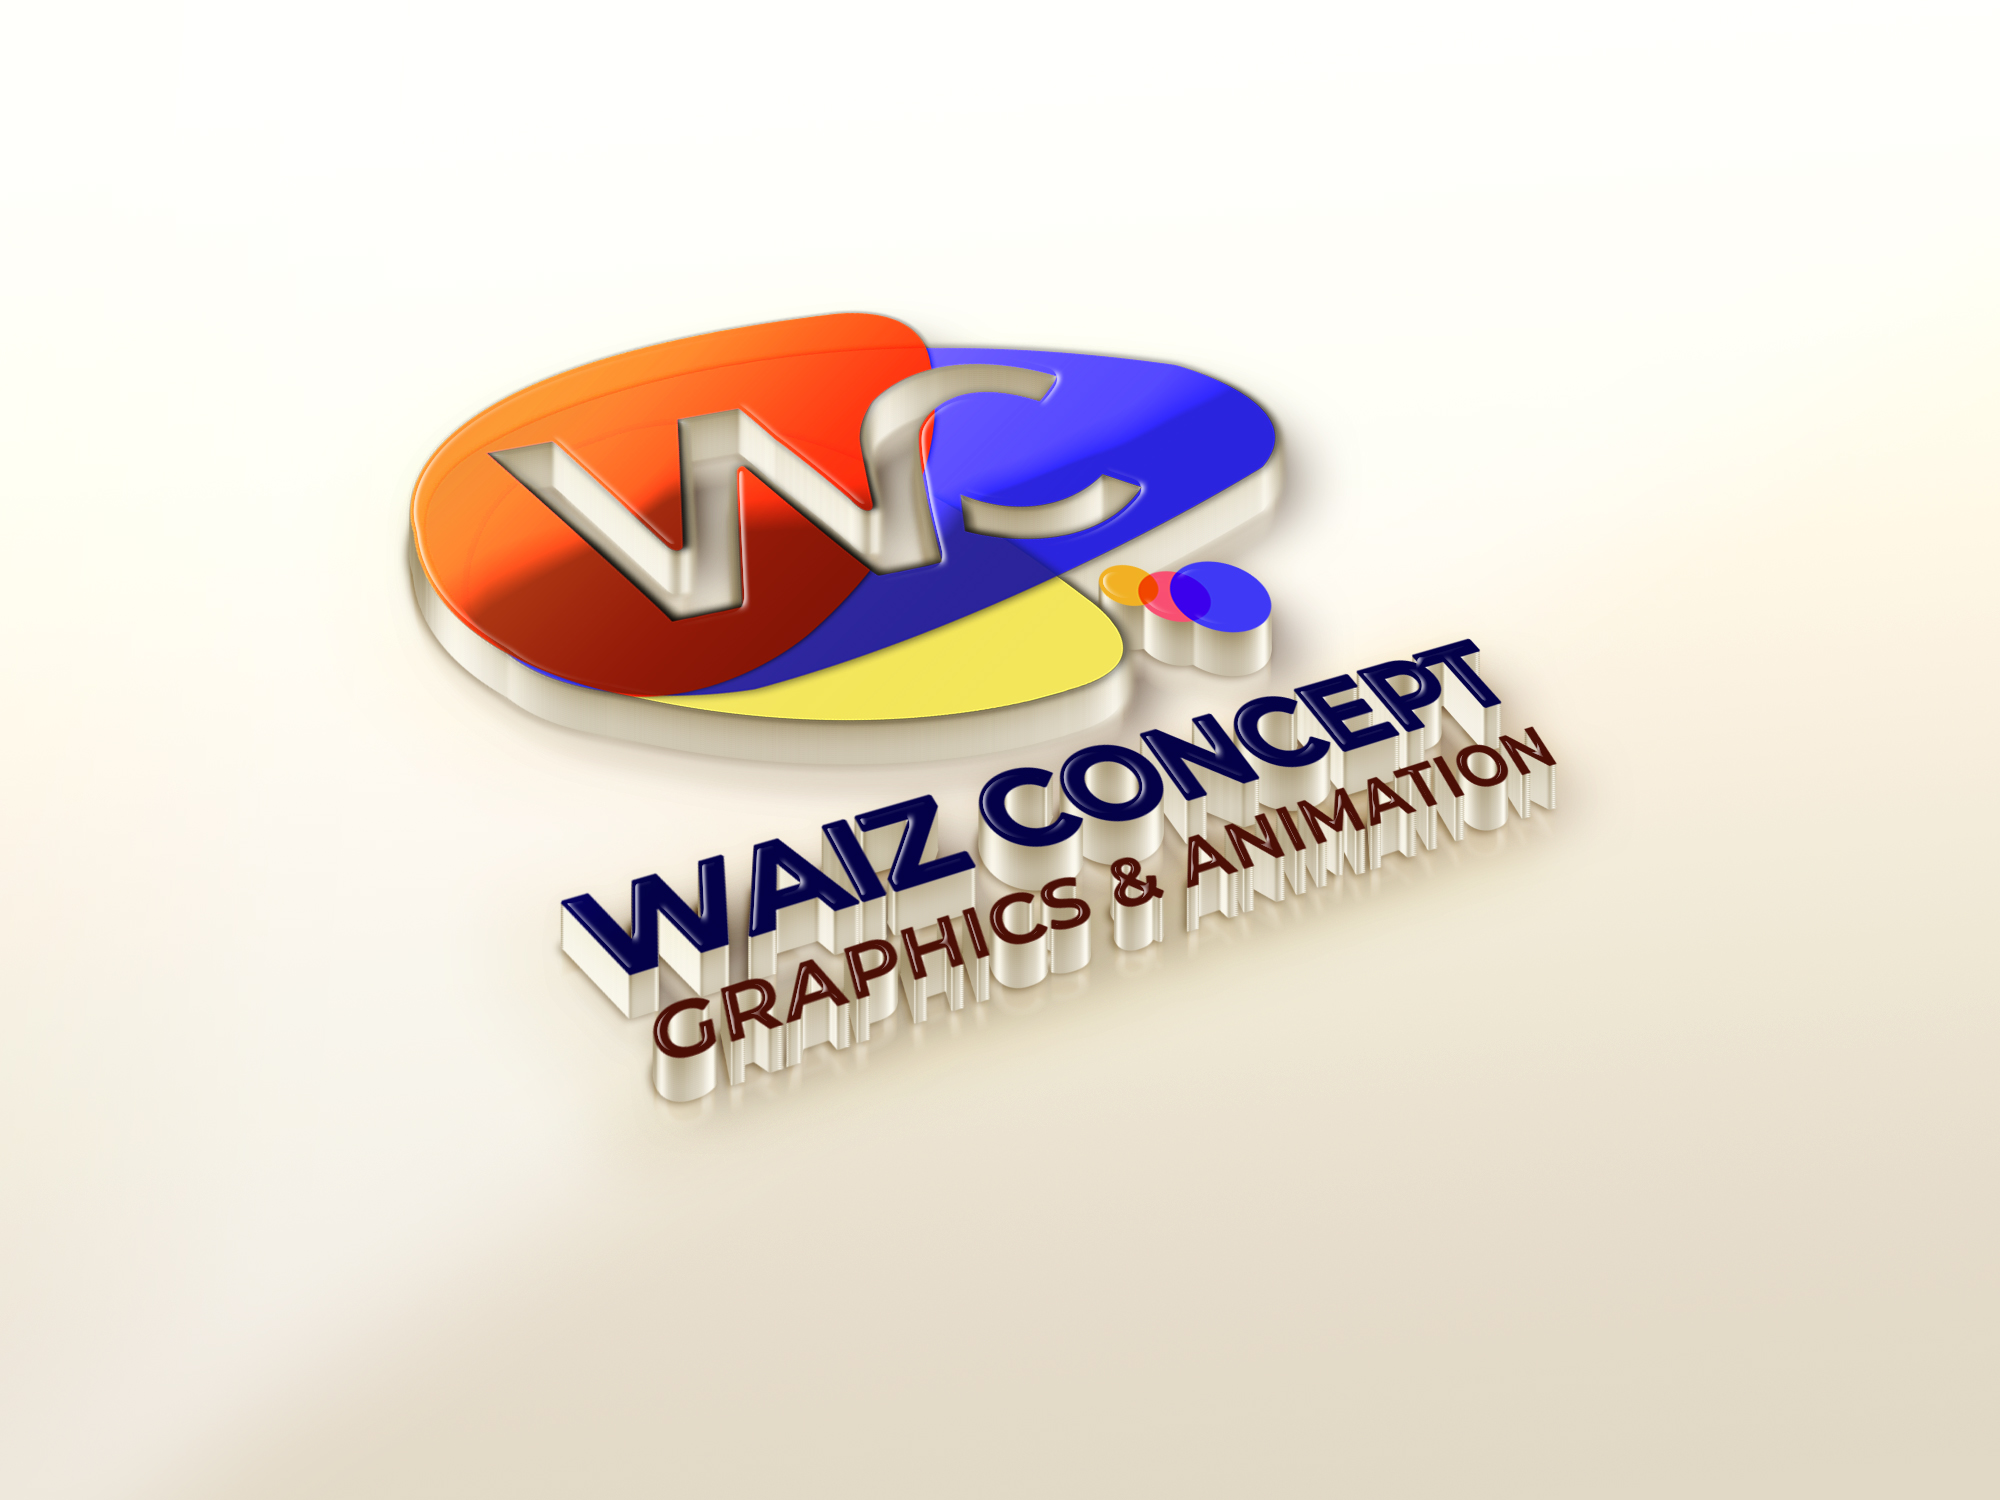 WAIZ CONCEPT GRAPHICS & ANIMATION provider